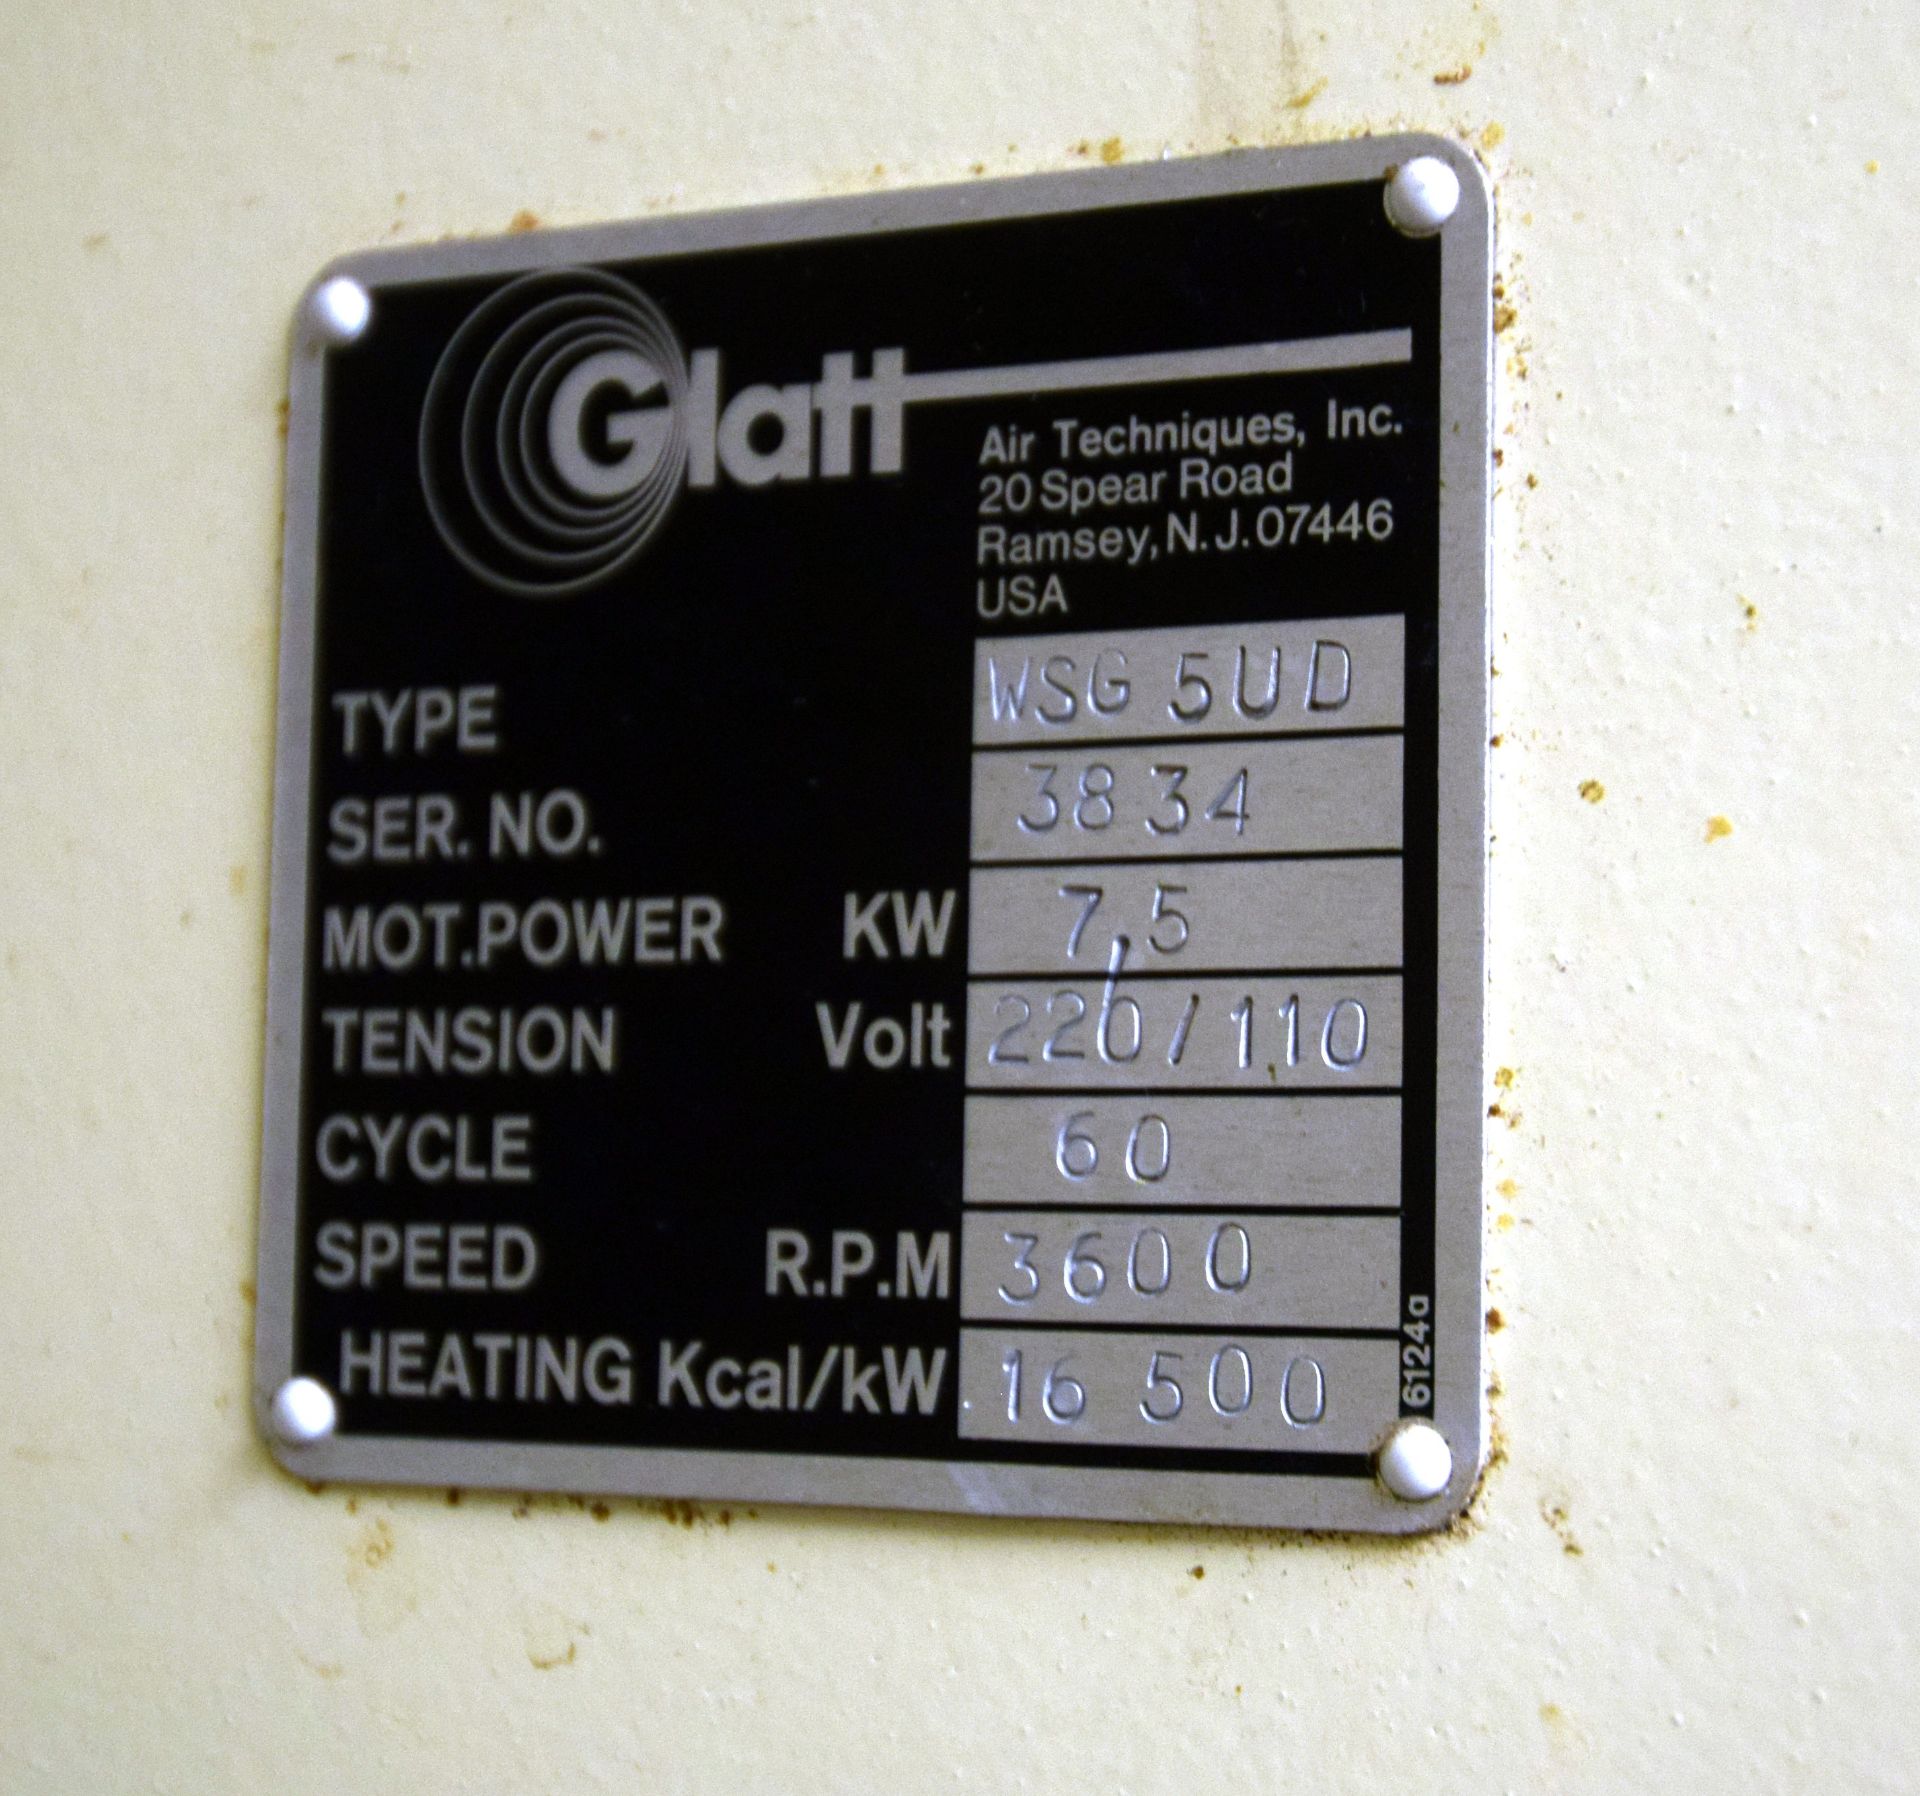 Glatt Fluid Bed Dryer, Model WSG-5UD, Stainless Steel, Serial# 3834. Top spray, Wurster insert, - Image 19 of 36